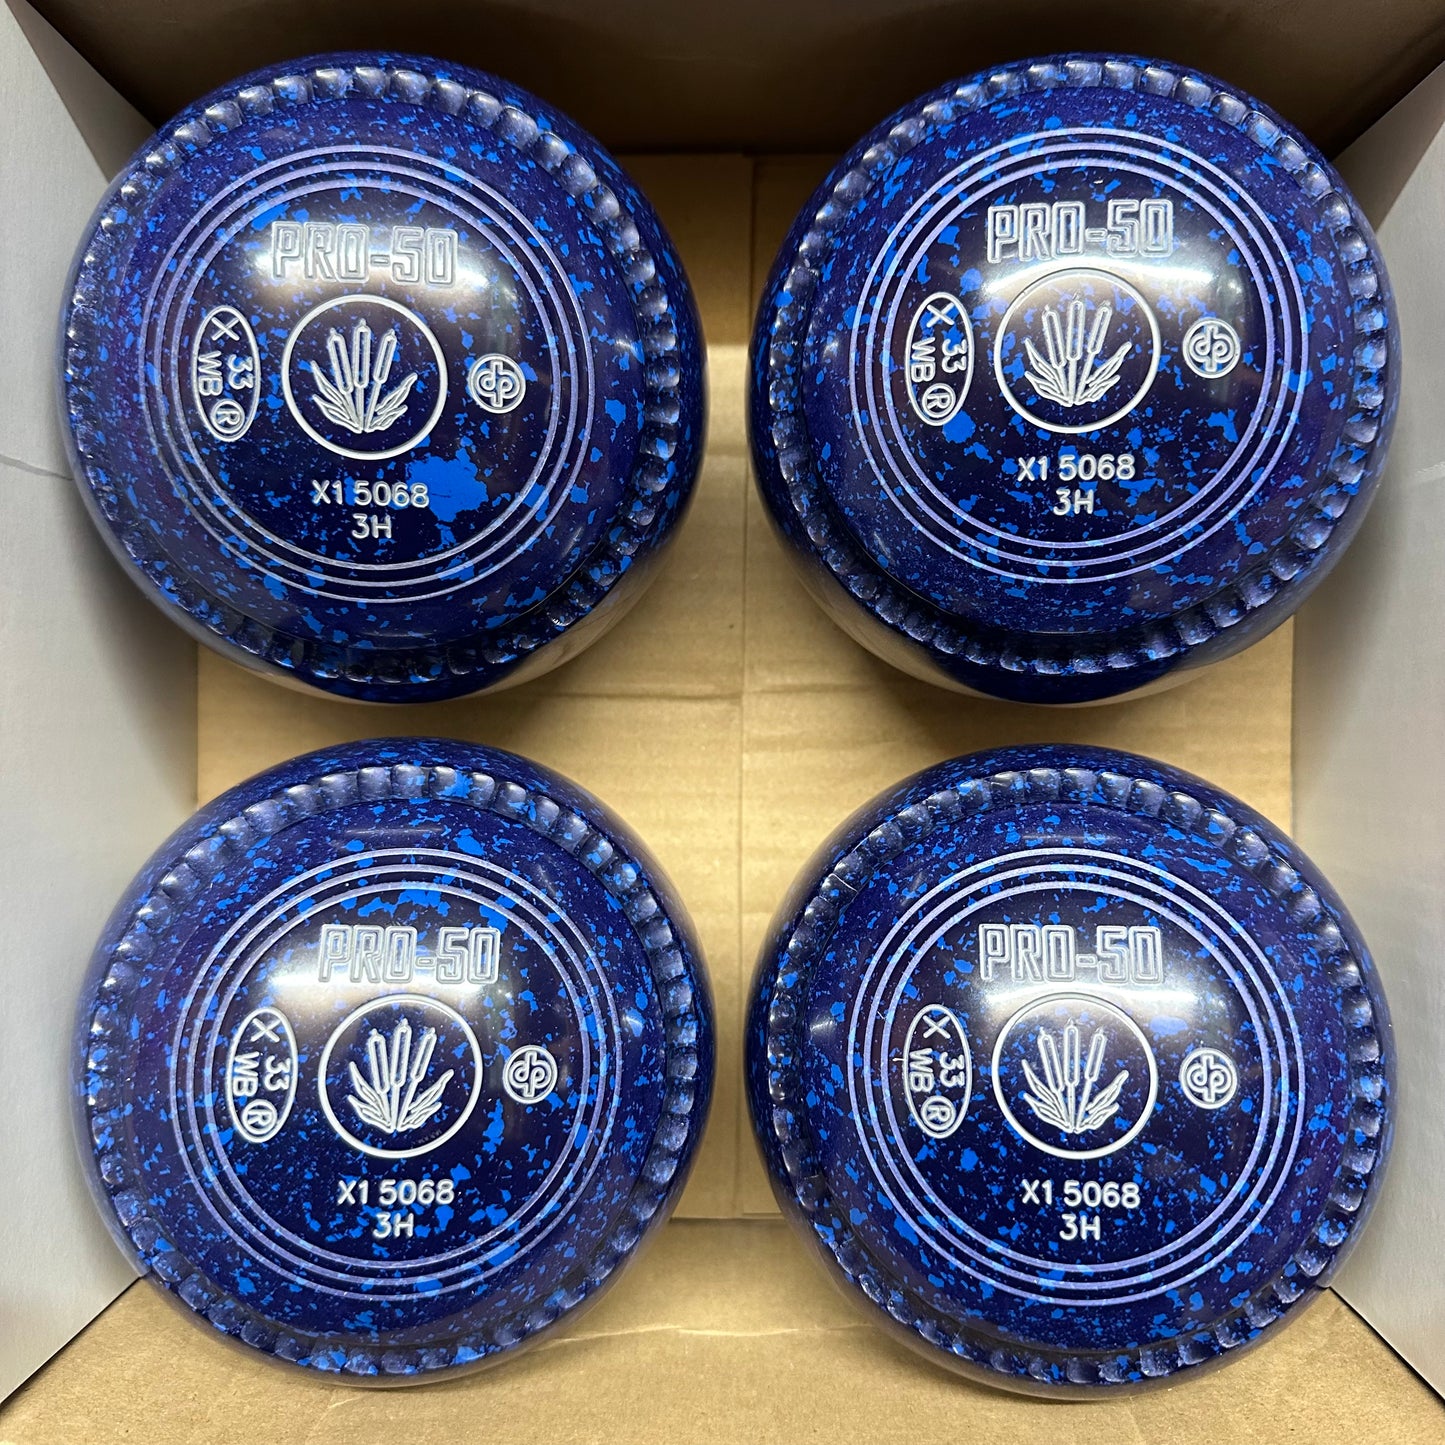 Drakes Pride PRO-50 - Size 3H - Dark Blue/Blue (Grey Rings) - WB33 Stamp